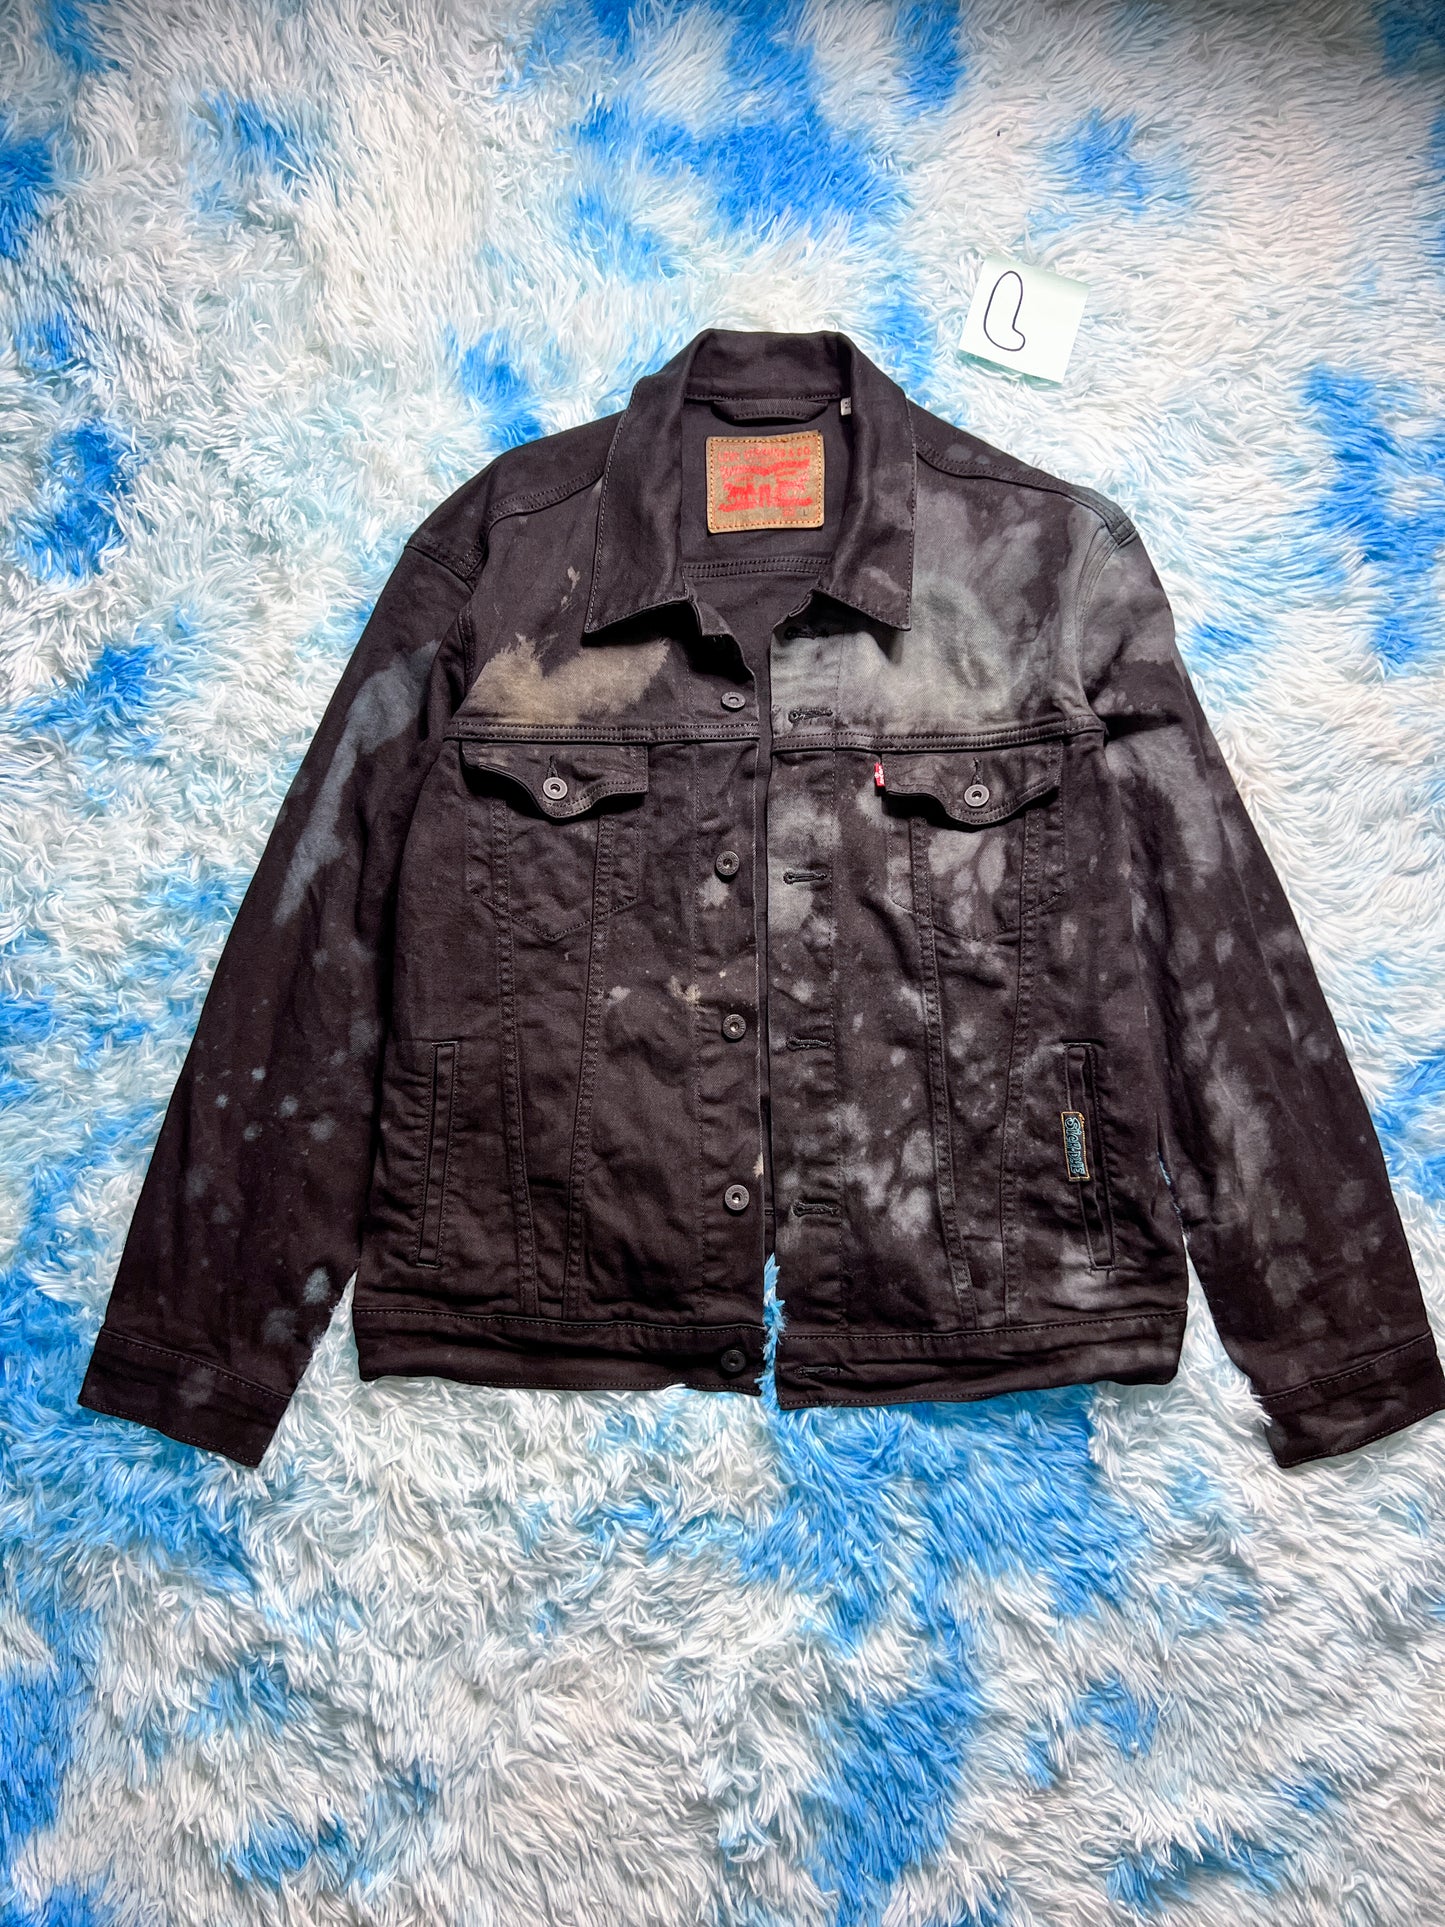 Splash Dye Levi's Trucker Jacket size (L) – Sick Dye